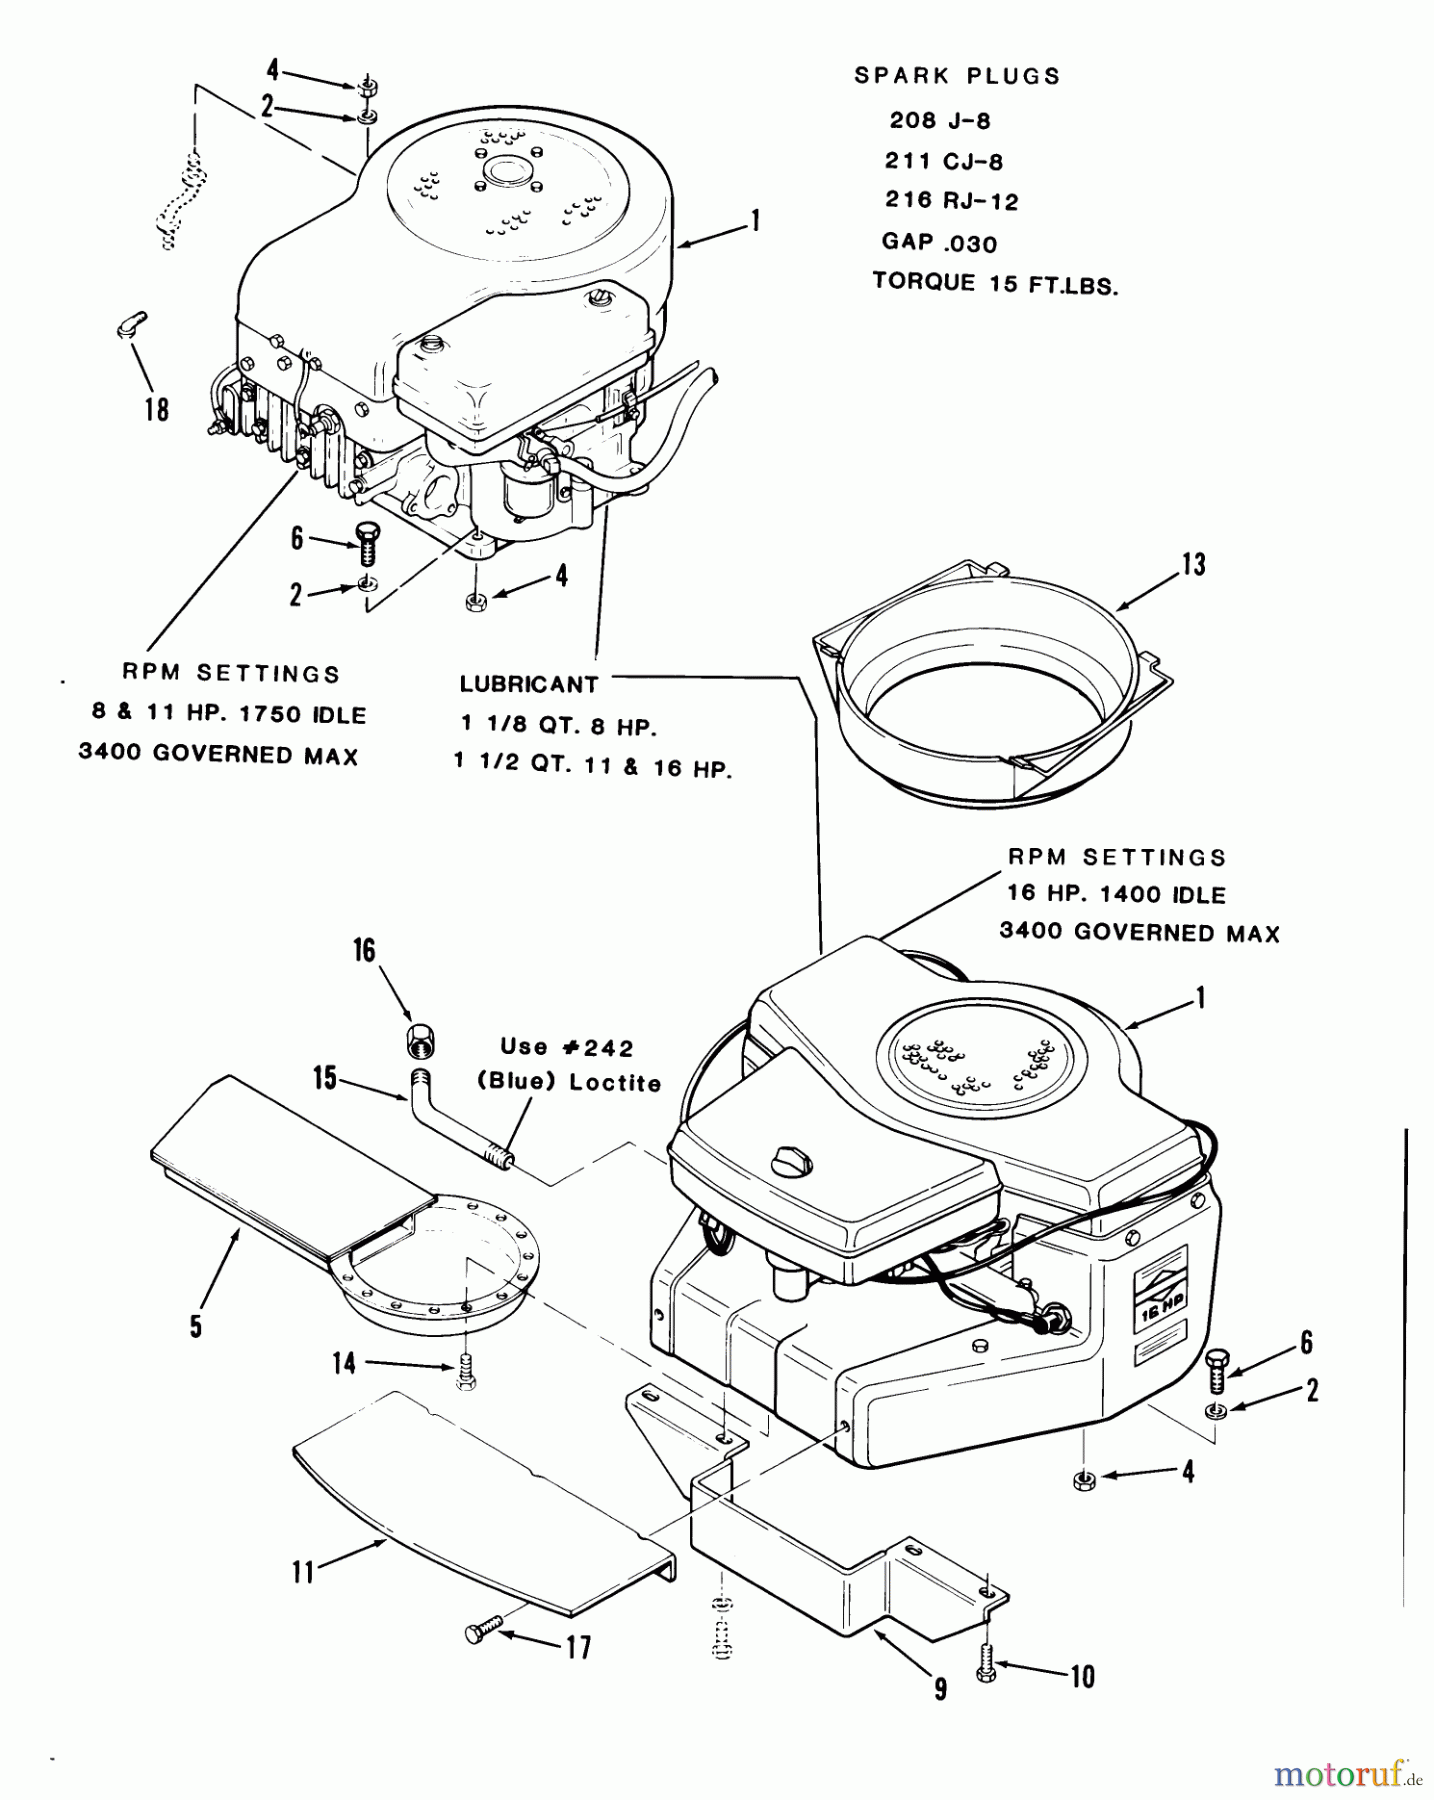  Toro Neu Mowers, Lawn & Garden Tractor Seite 1 22-16B501 (216-5) - Toro 216-5 Tractor, 1985 ENGINE